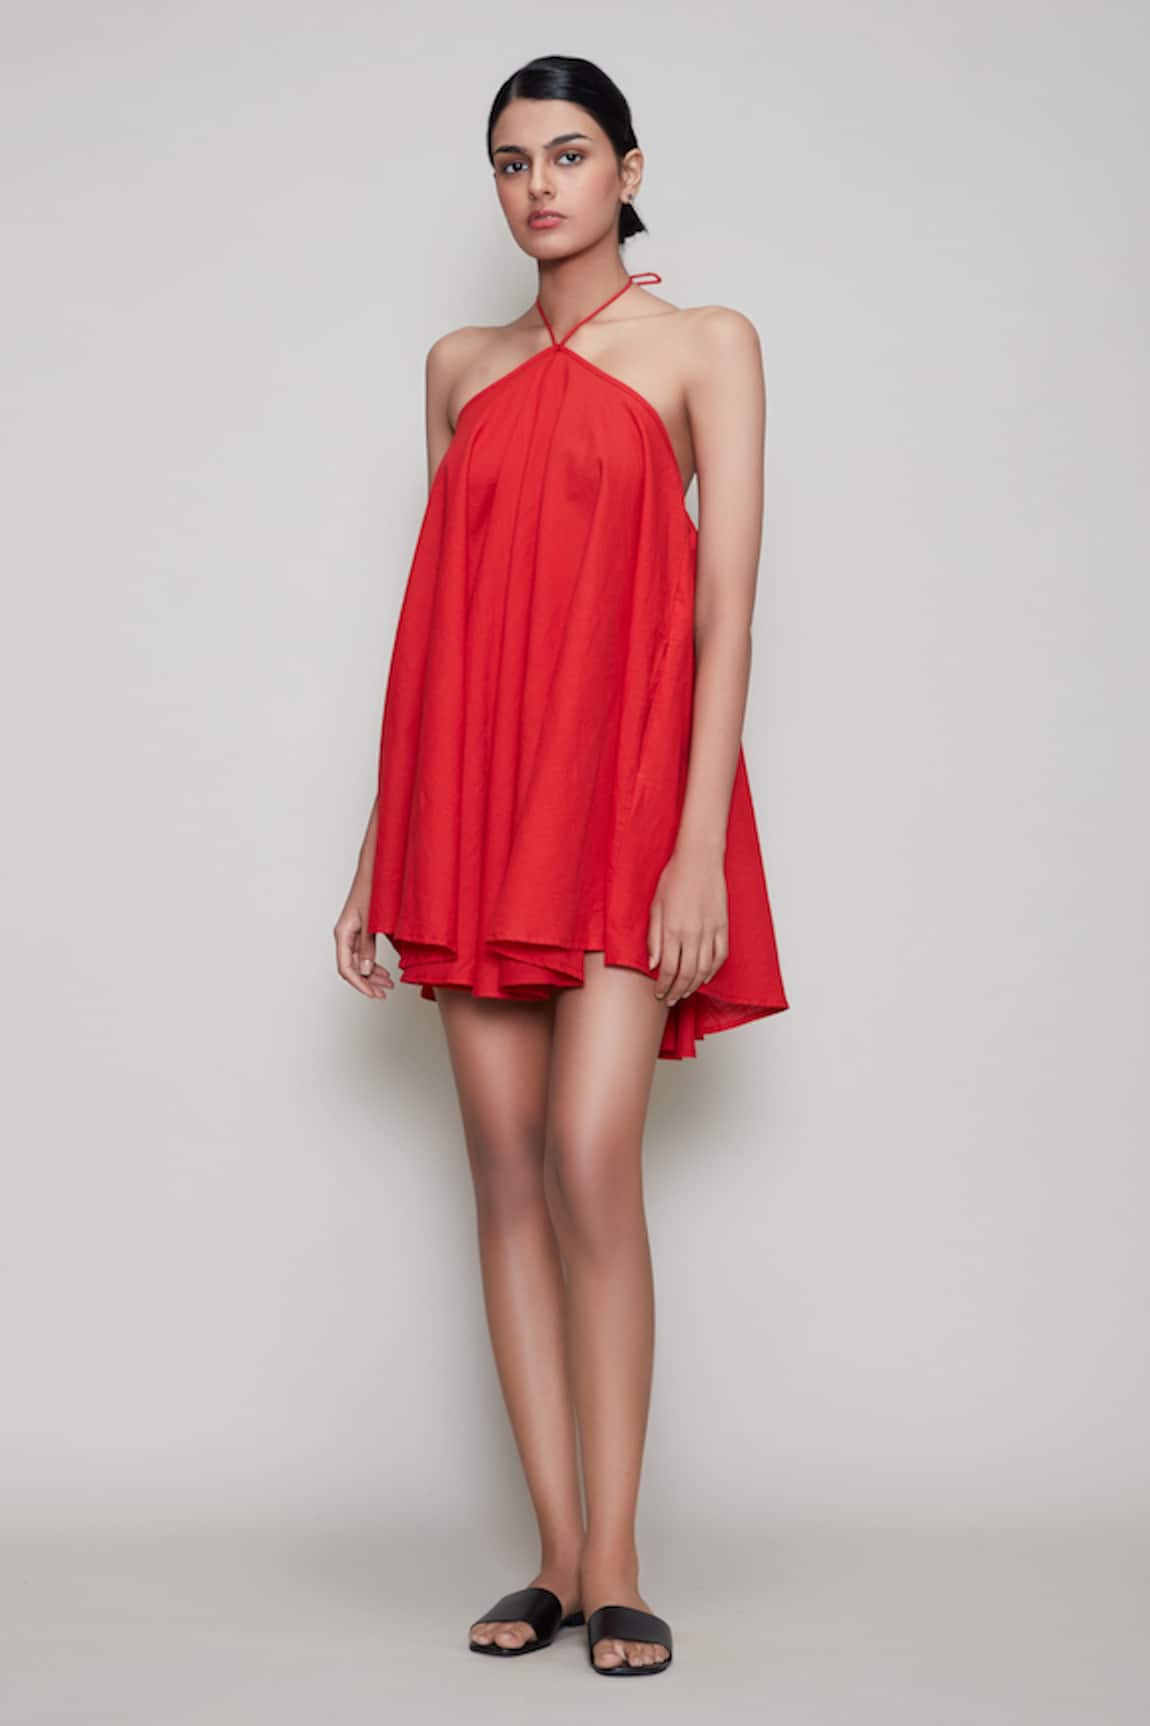 50 Exposed Red Carpet Backless Dresses (Mini & Maxi)